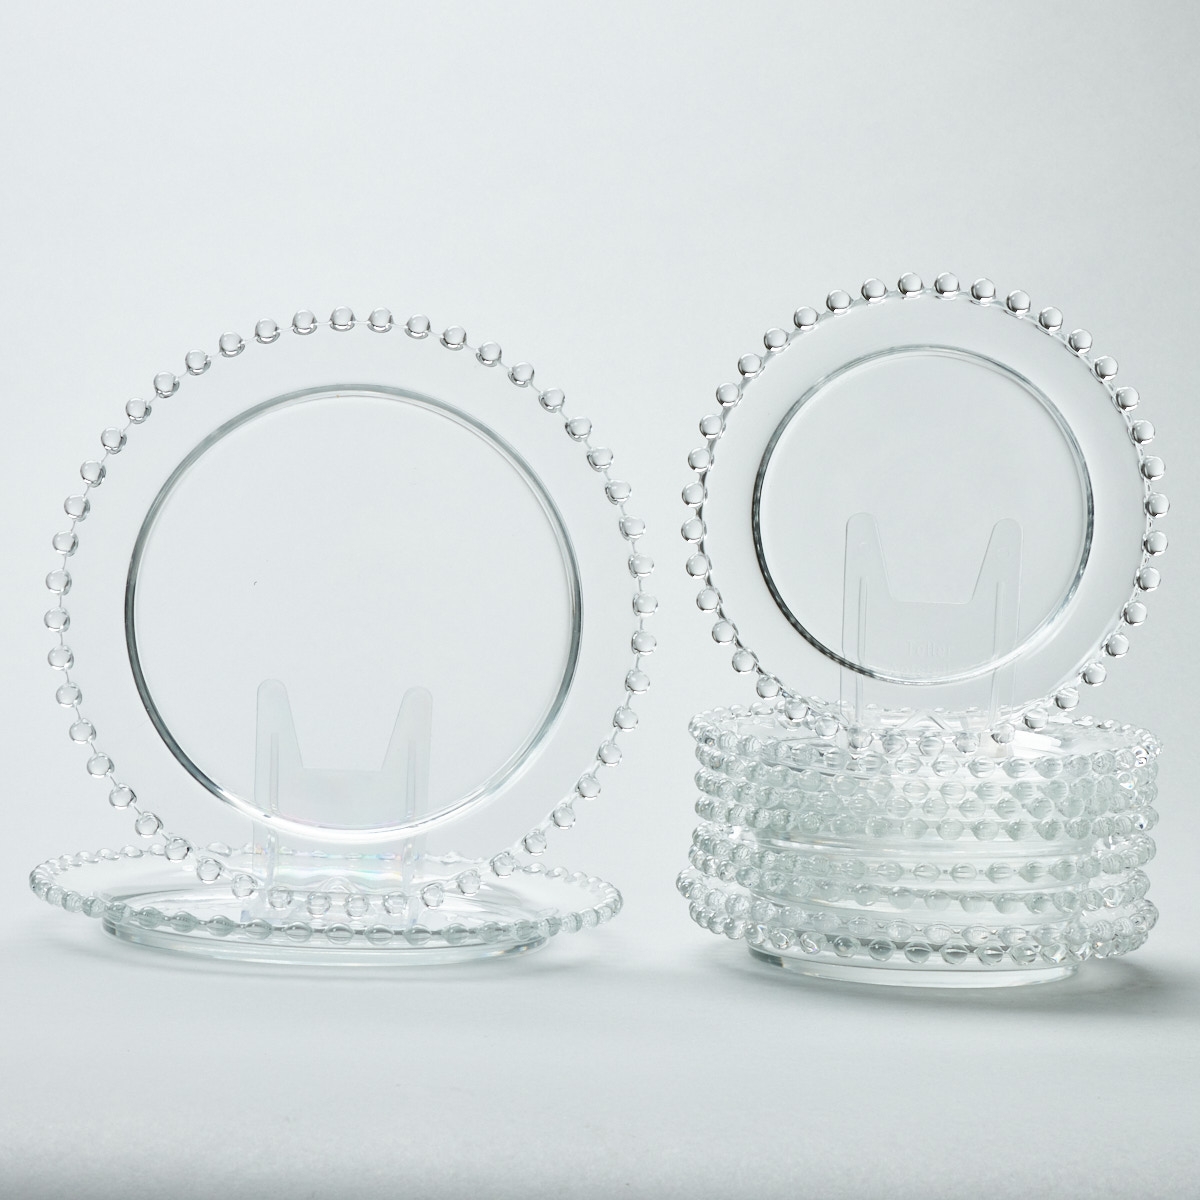 9 Dessertteller und 2 Teller Lalique - Serie Andlau. - Image 2 of 2